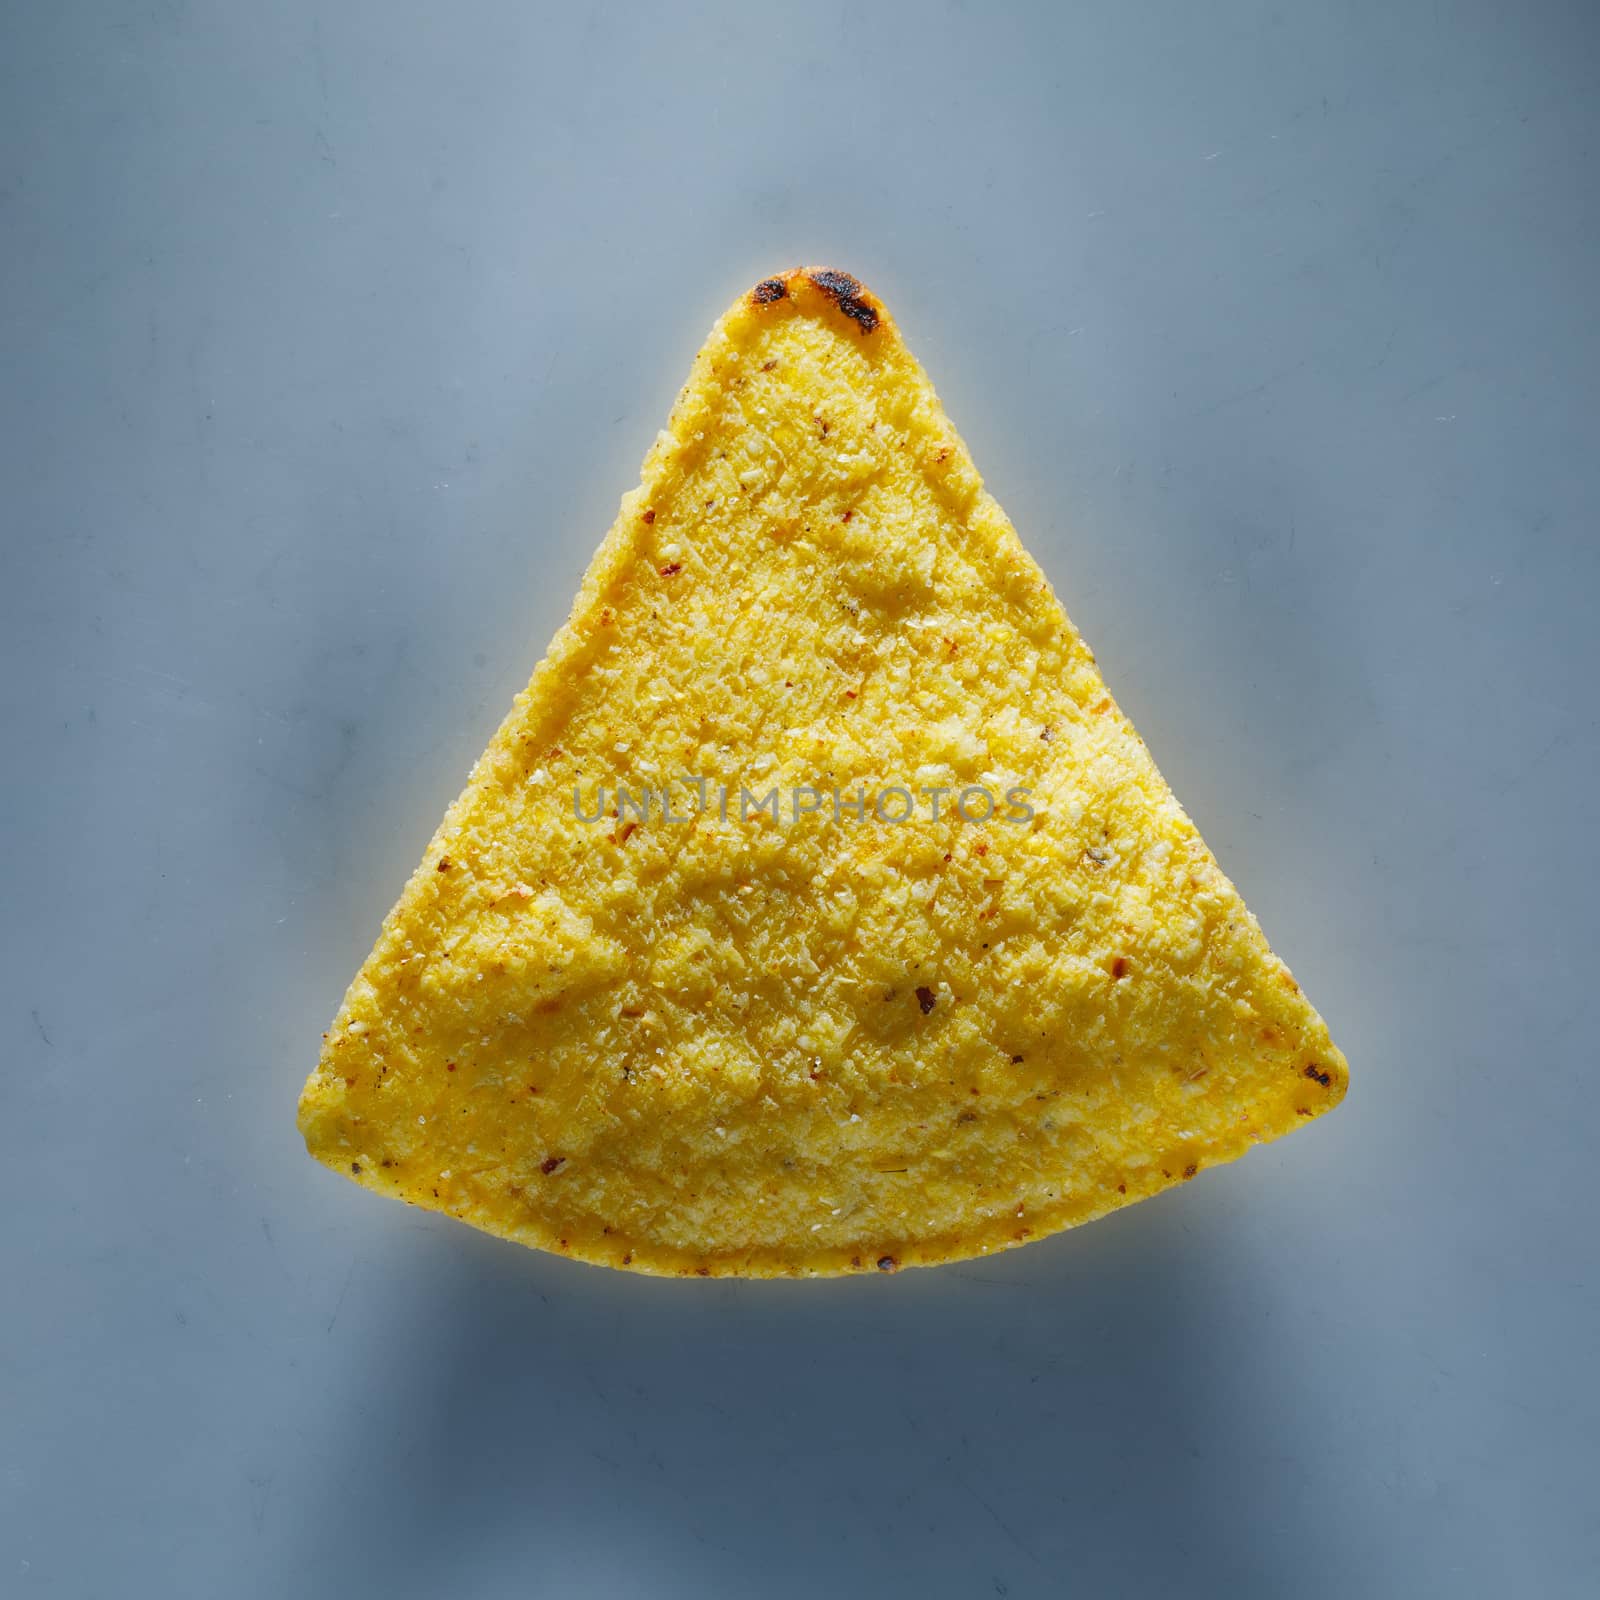 mexican nachos tortilla chips, close-up view